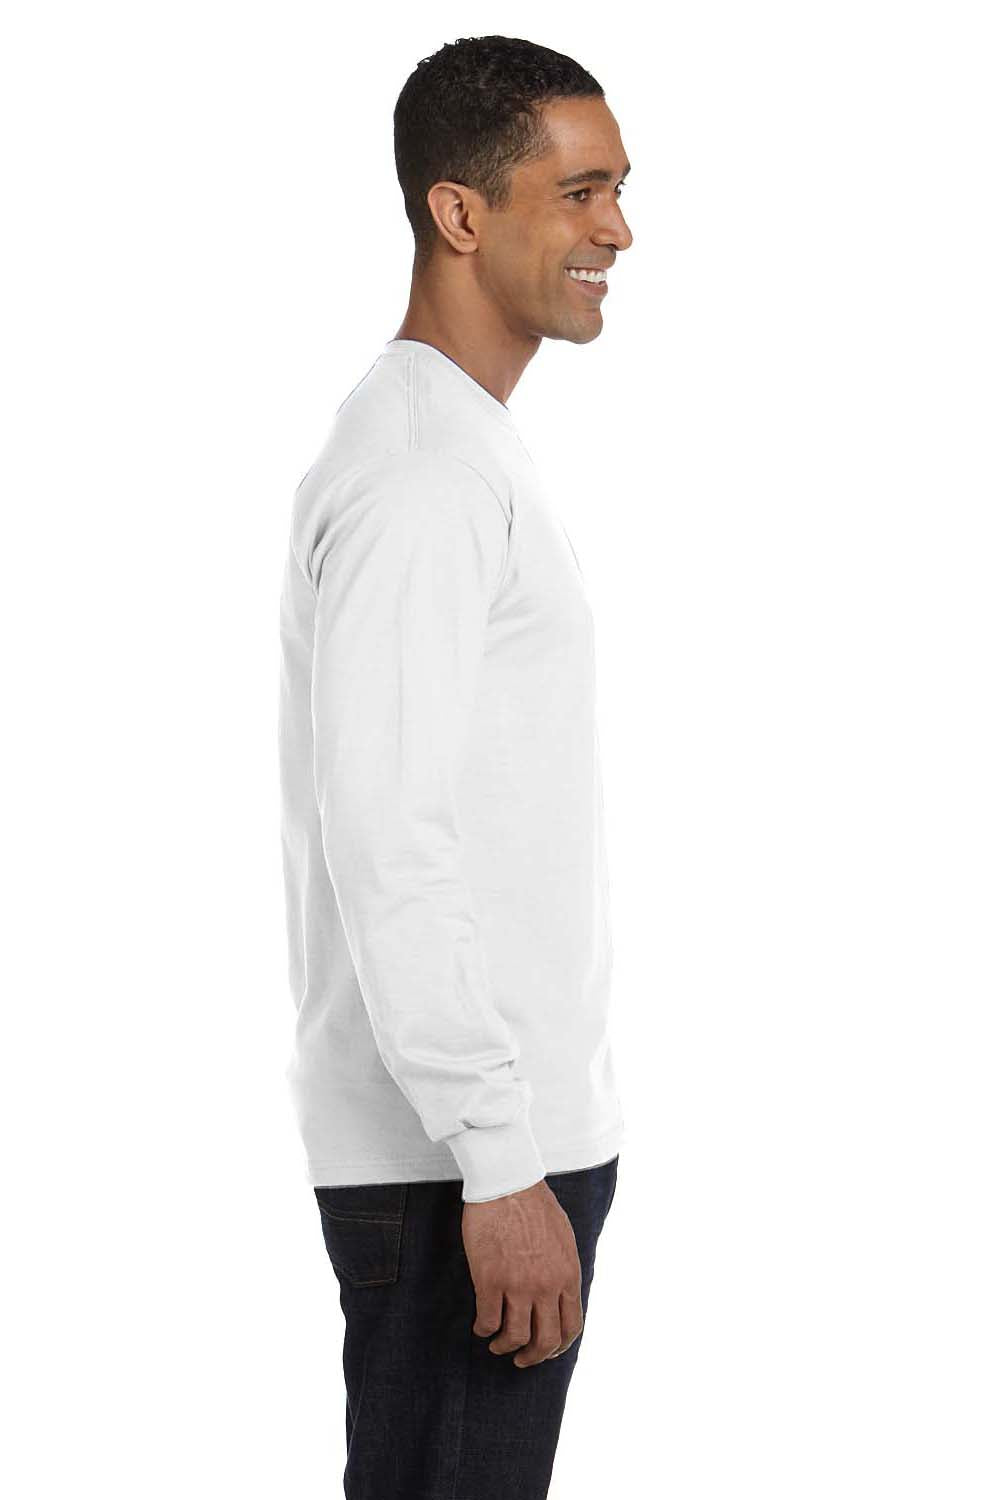 Hanes 5286 Mens ComfortSoft Long Sleeve Crewneck T-Shirt White Side